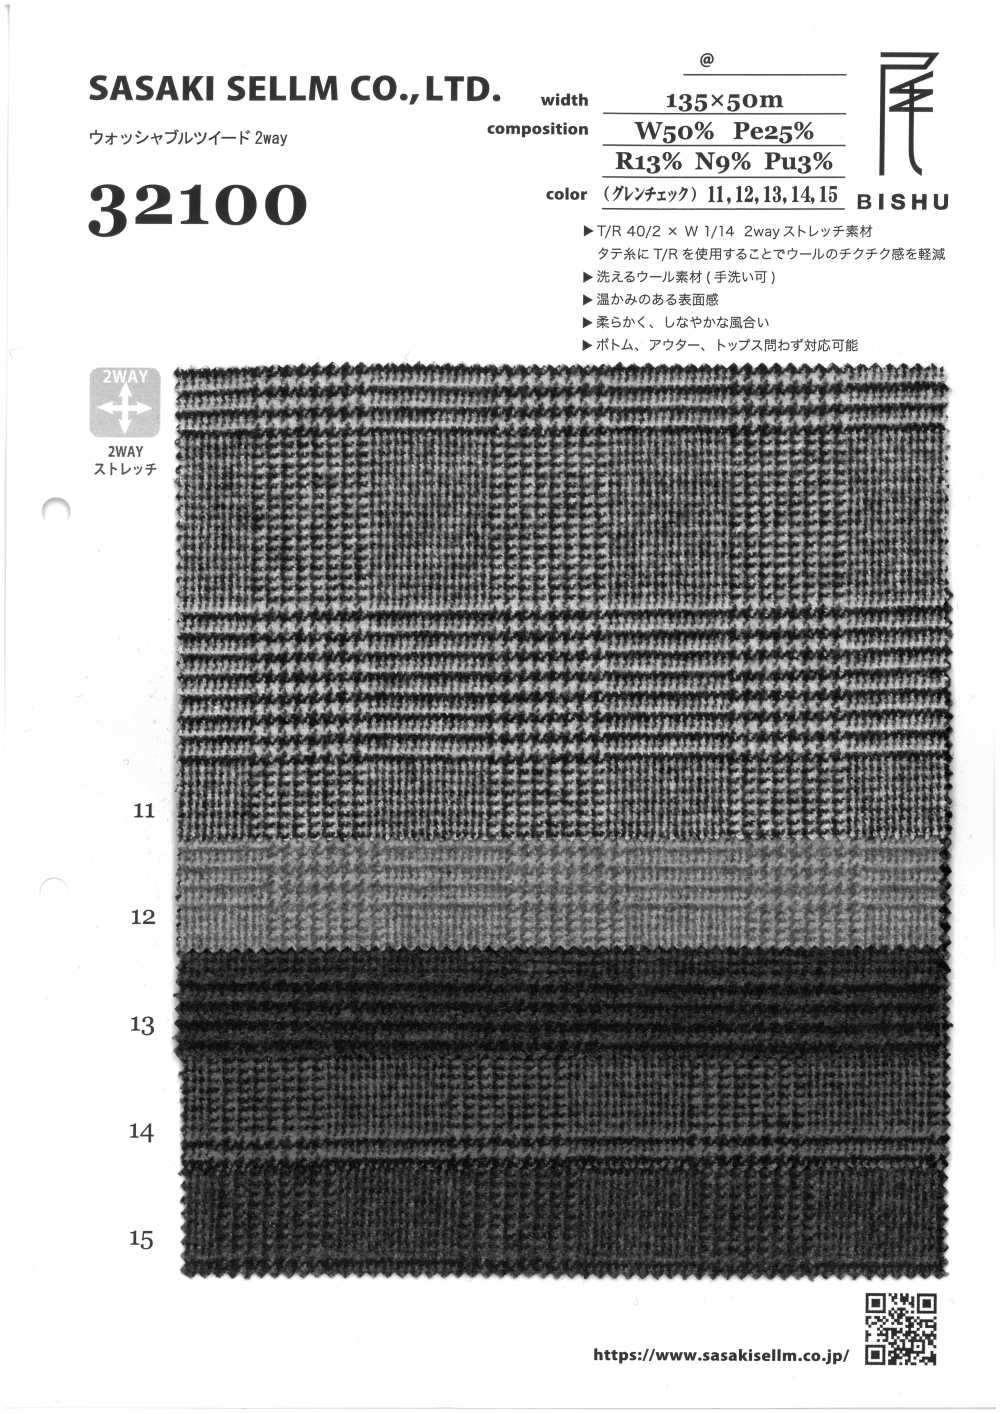 32100-10 Tweed Lavable 2WAY Glen Check[Fabrication De Textile] SASAKISELLM